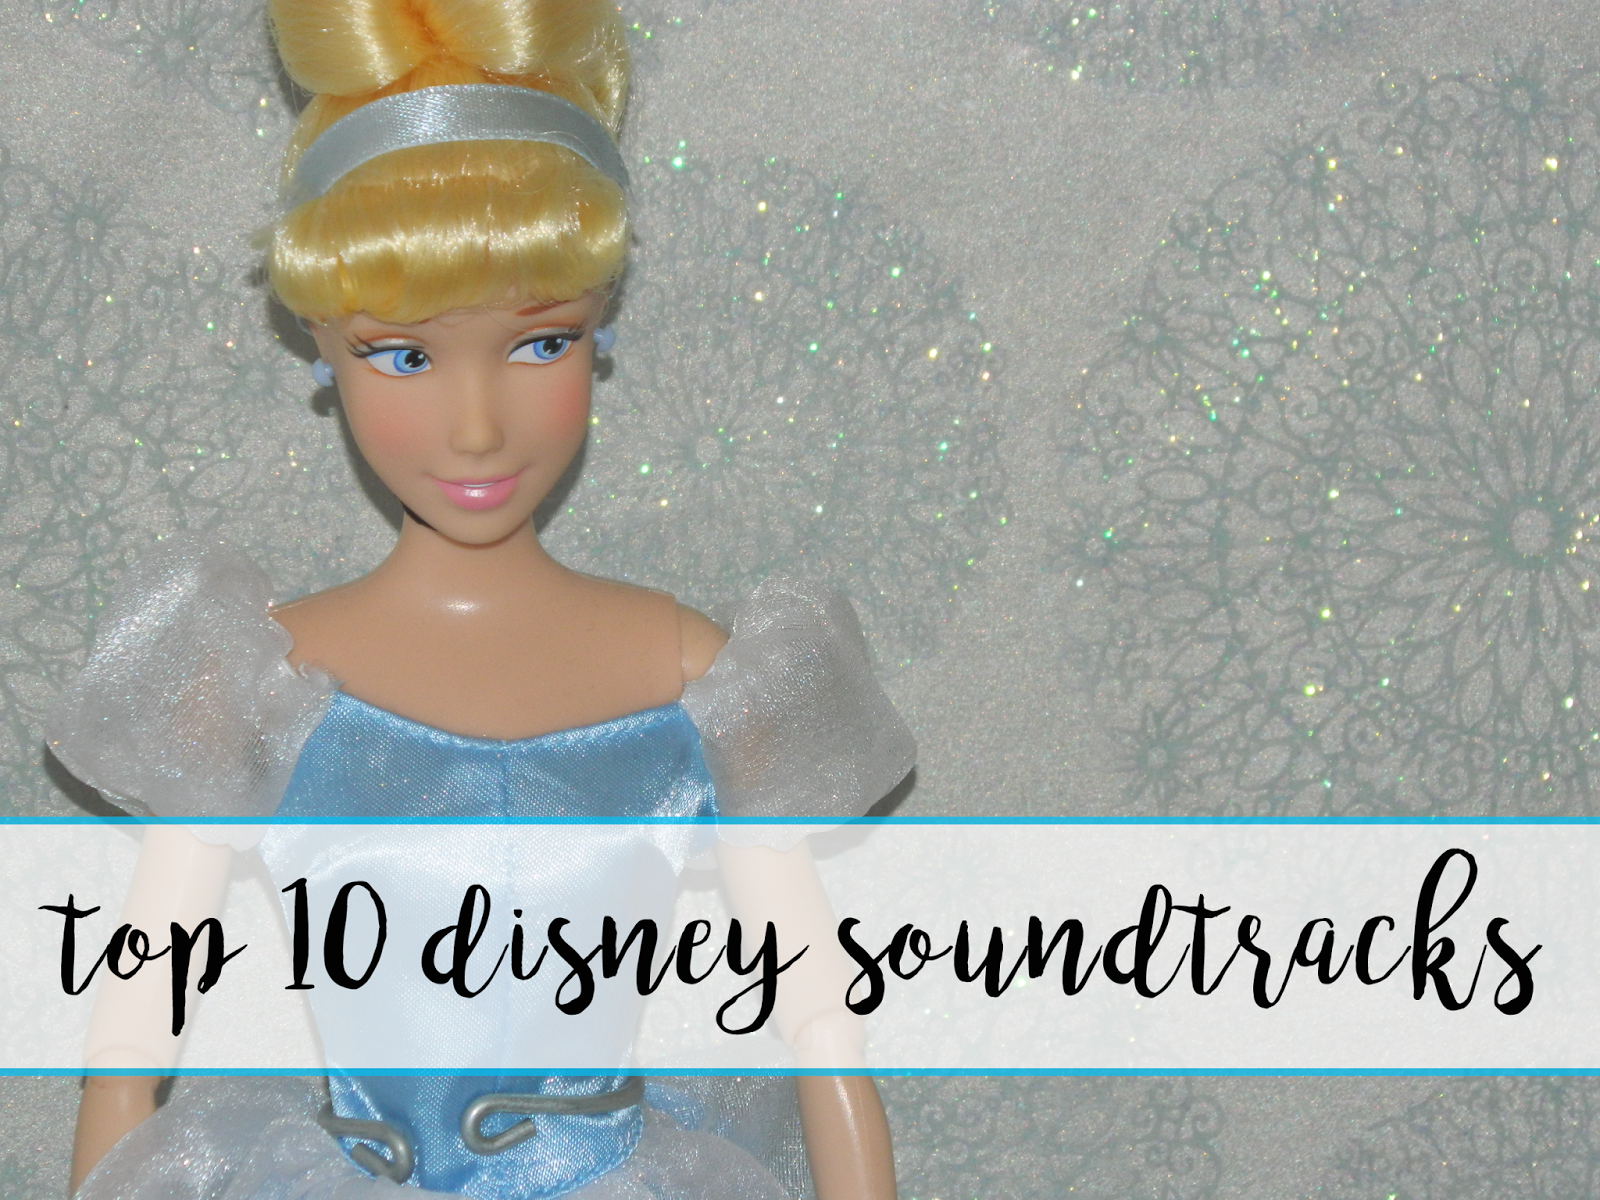 and talentfulde Ekstrem fattigdom Top 10 Disney Soundtracks - The Perks of being Me